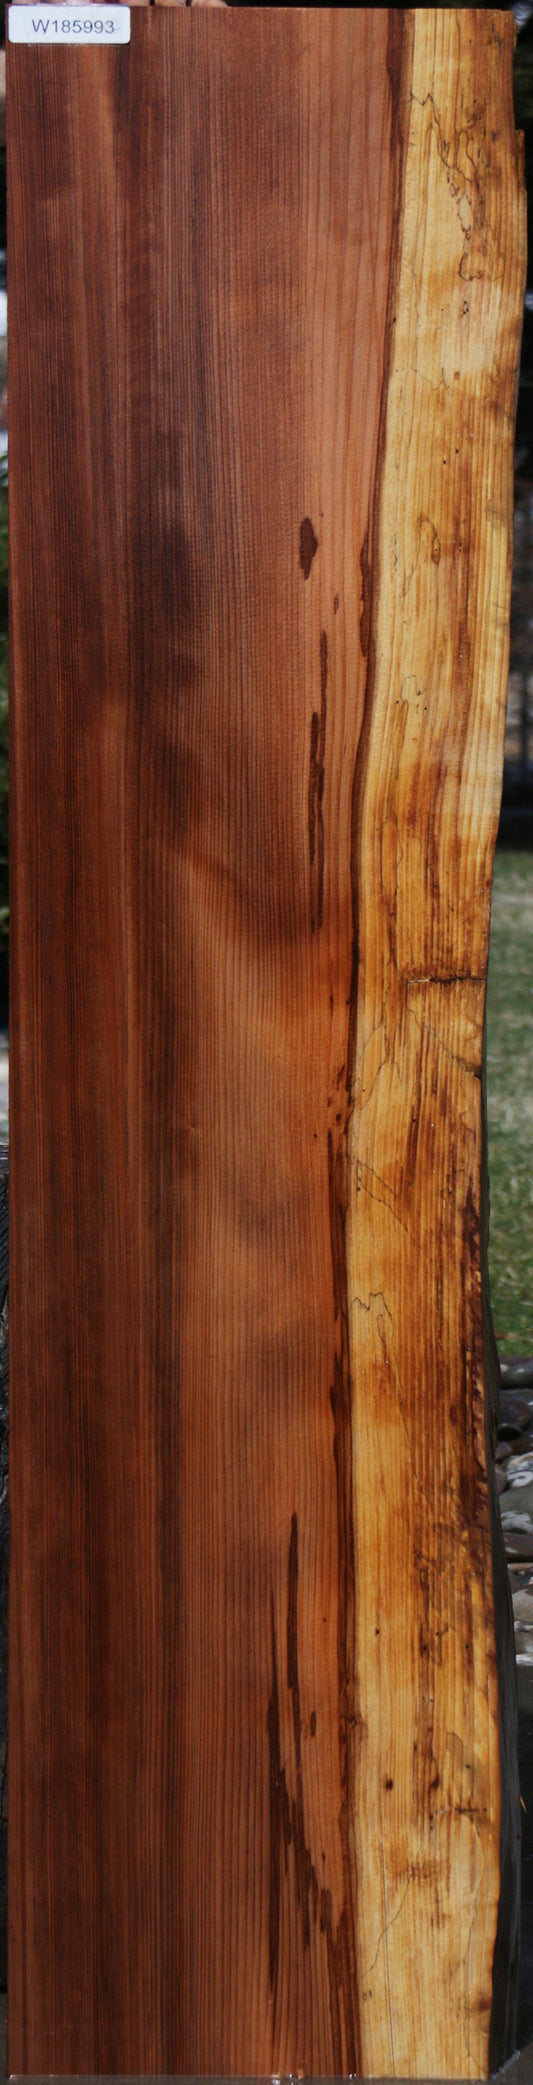 Old Growth Redwood Live Edge Lumber